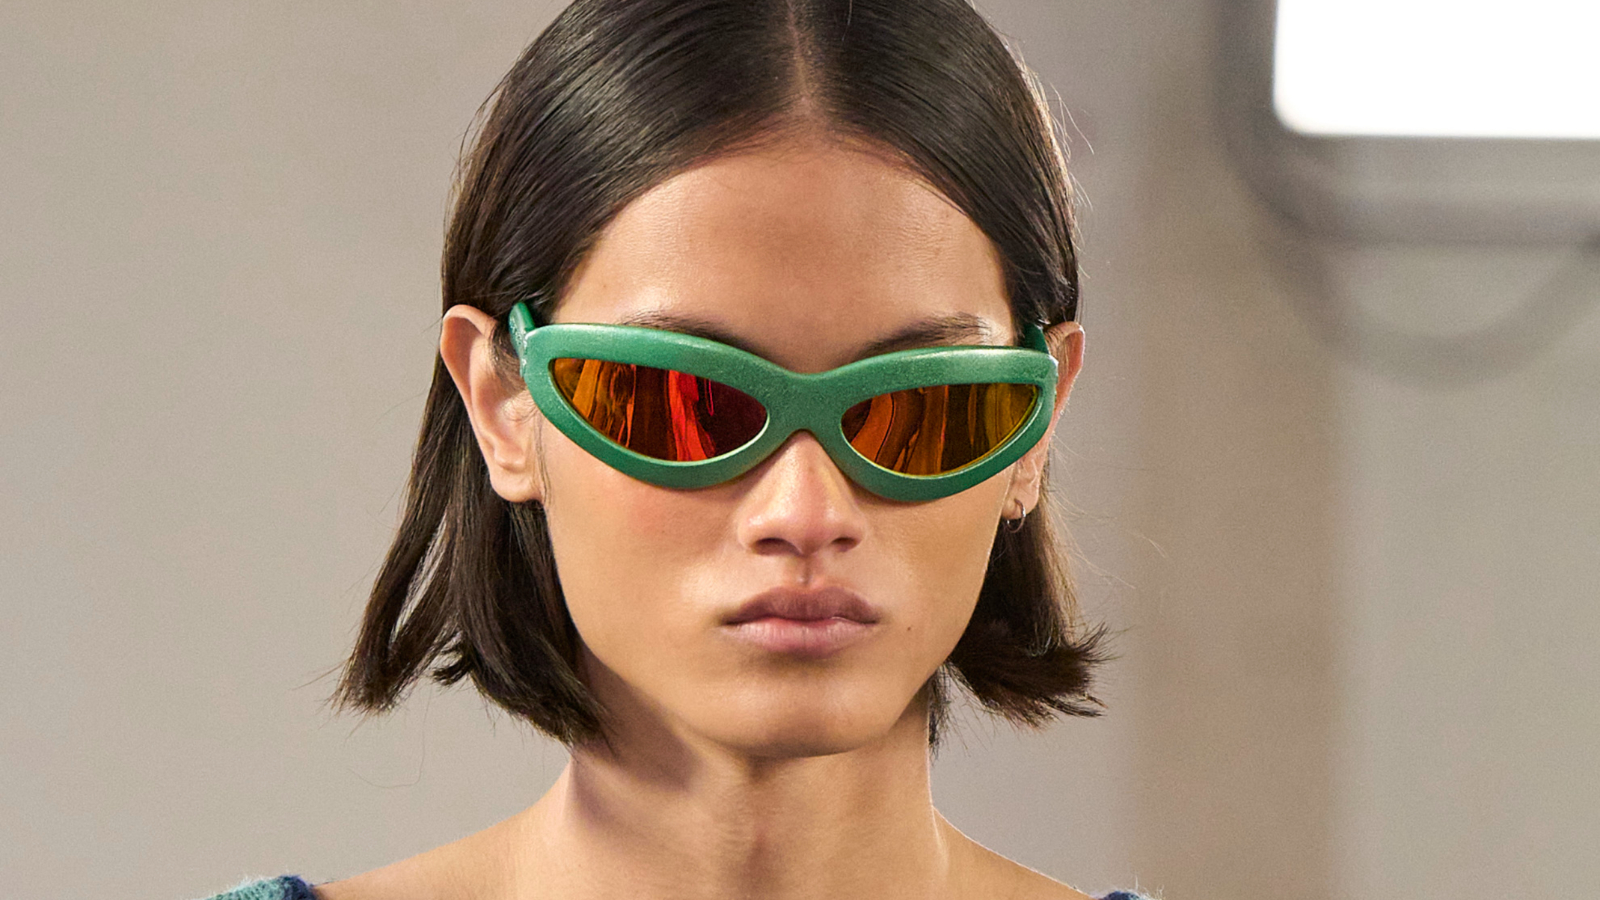 Trend alert: Budite prvi i ponesite futurističke modele naočara inspirisane esktremnim sportovima